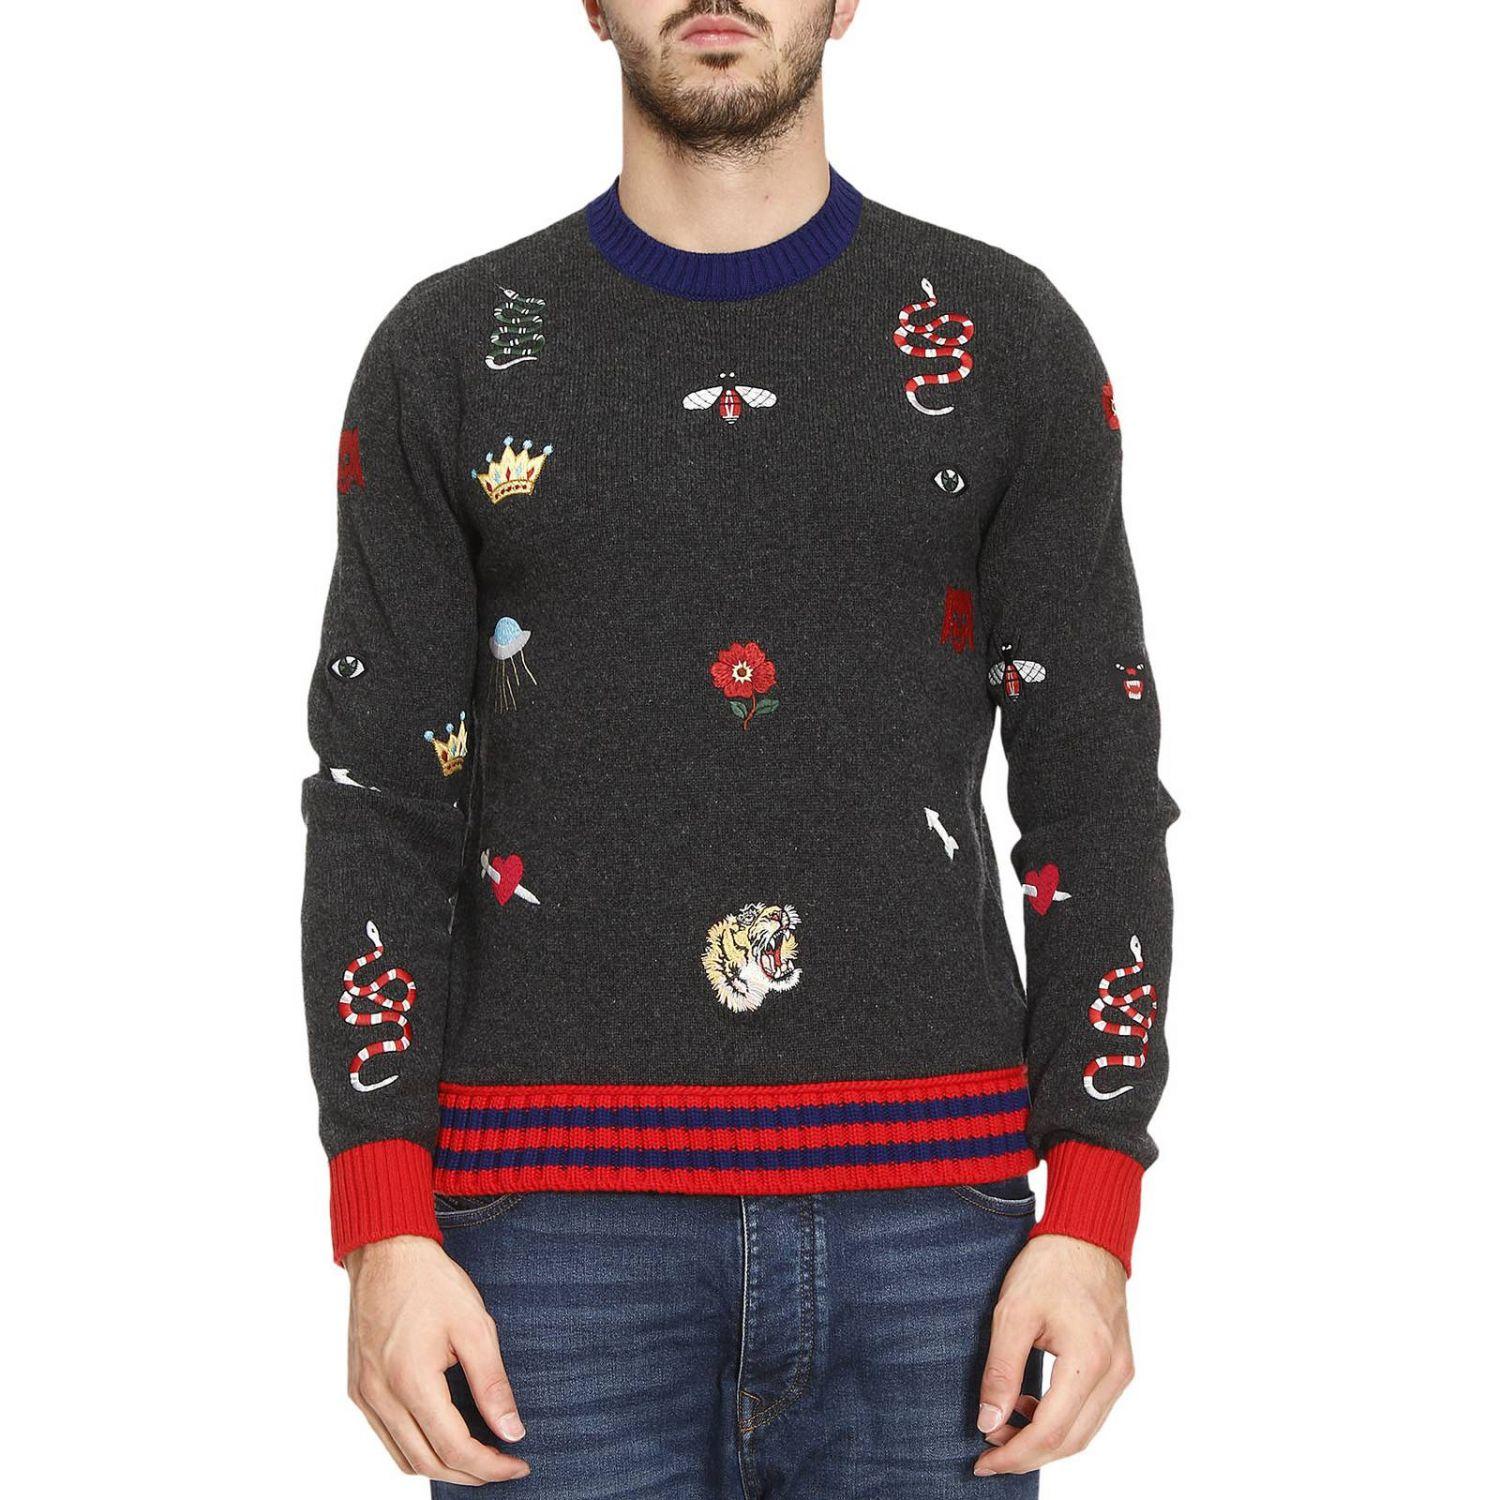 2015 Promotion Hot Sale Cotton Sweaters Sweater Men